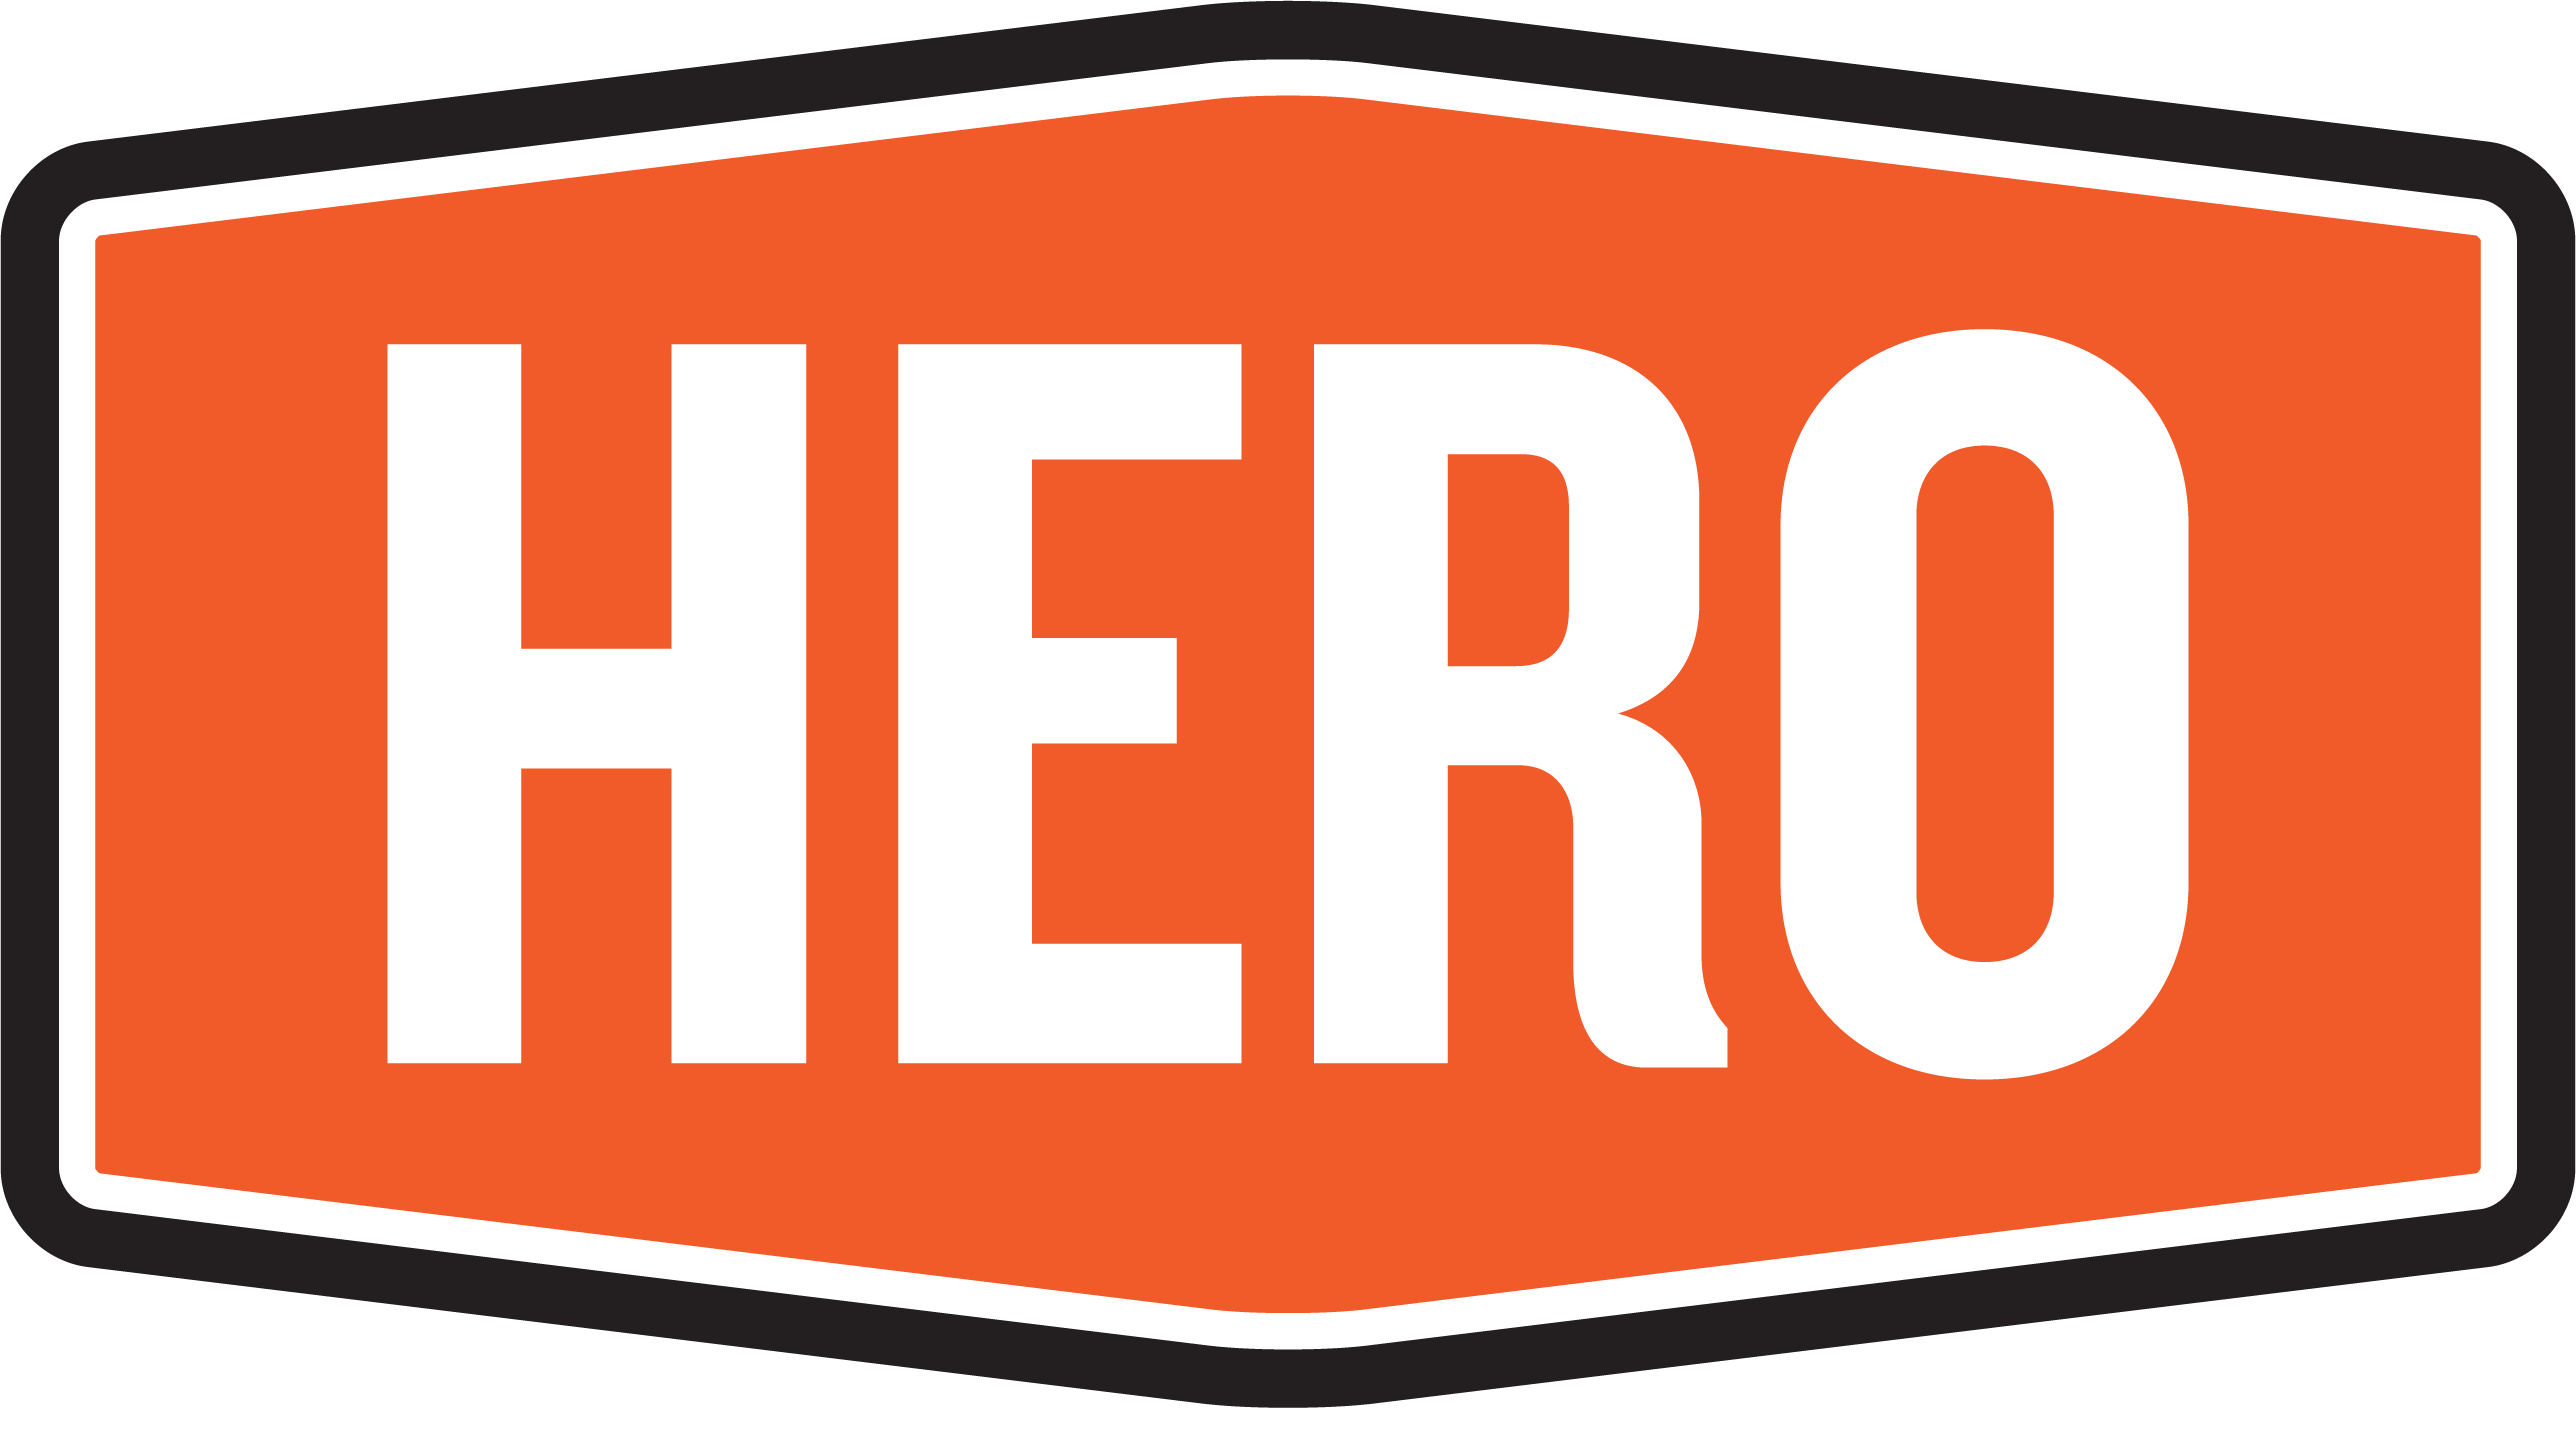 Hero Logos - 169+ Best Hero Logo Ideas. Free Hero Logo Maker. | 99designs